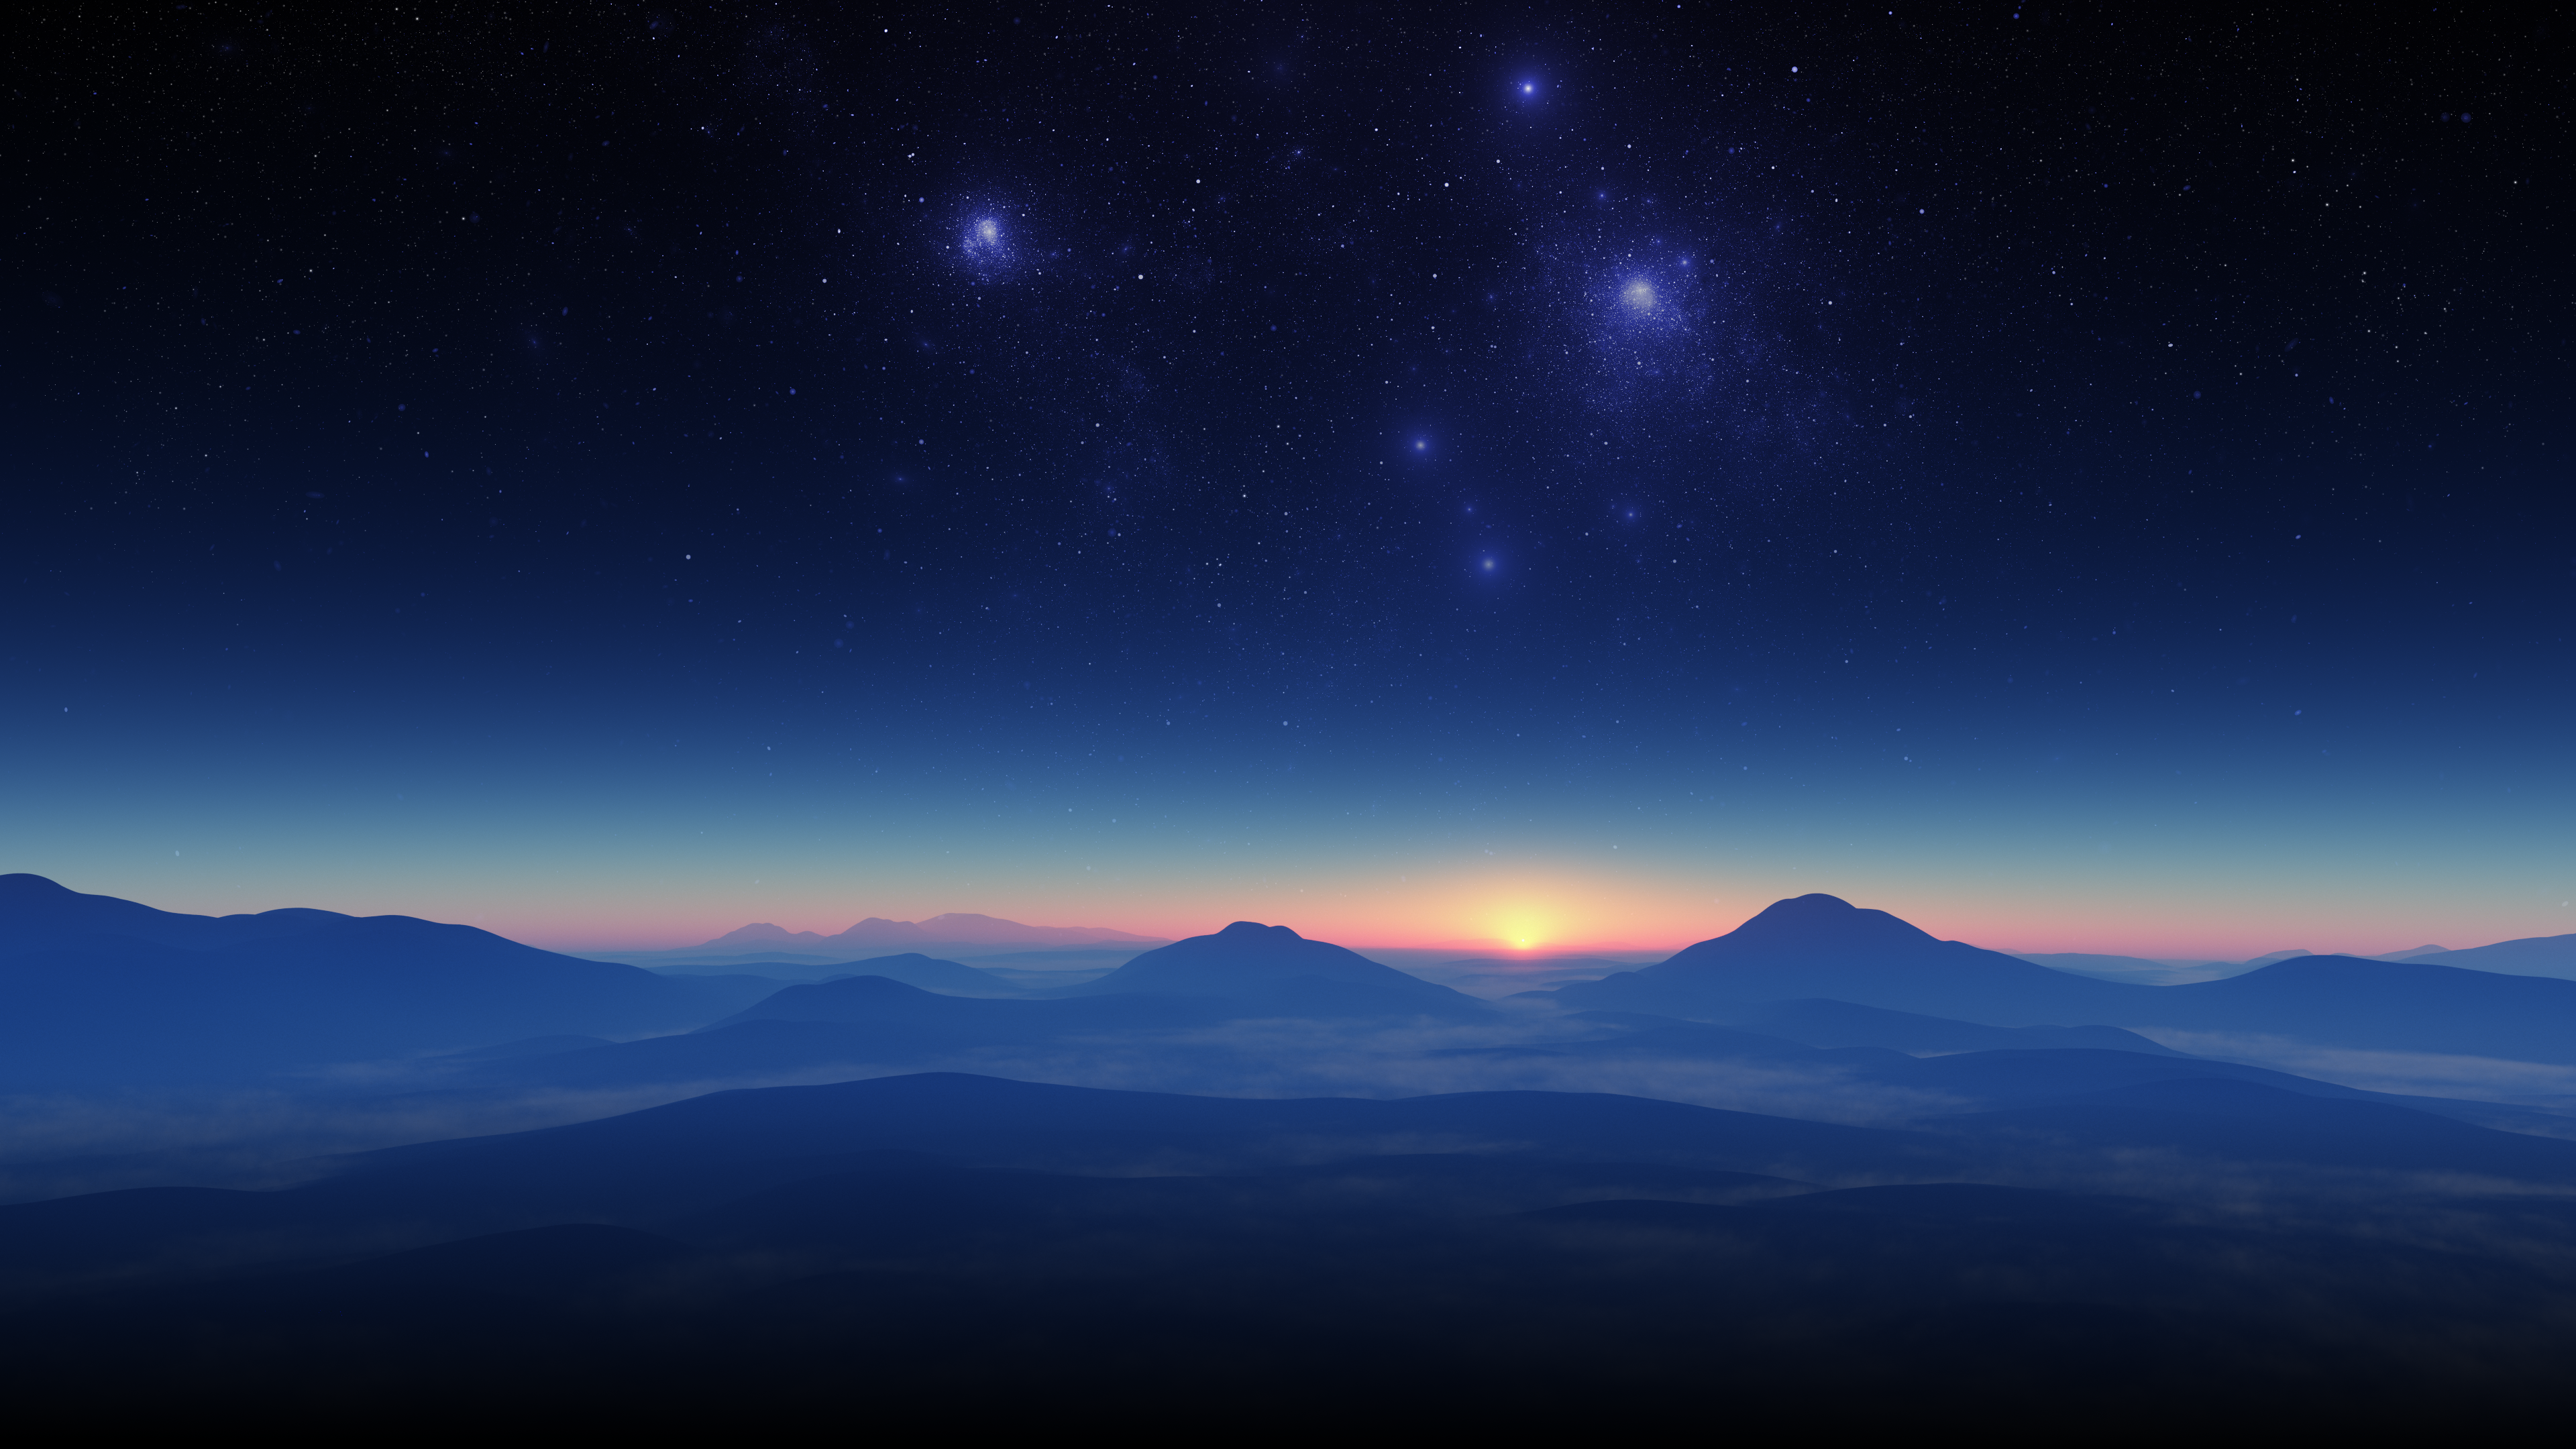 General 3840x2160 hypnoshot digital art artwork illustration CGI nature landscape mountains night stars